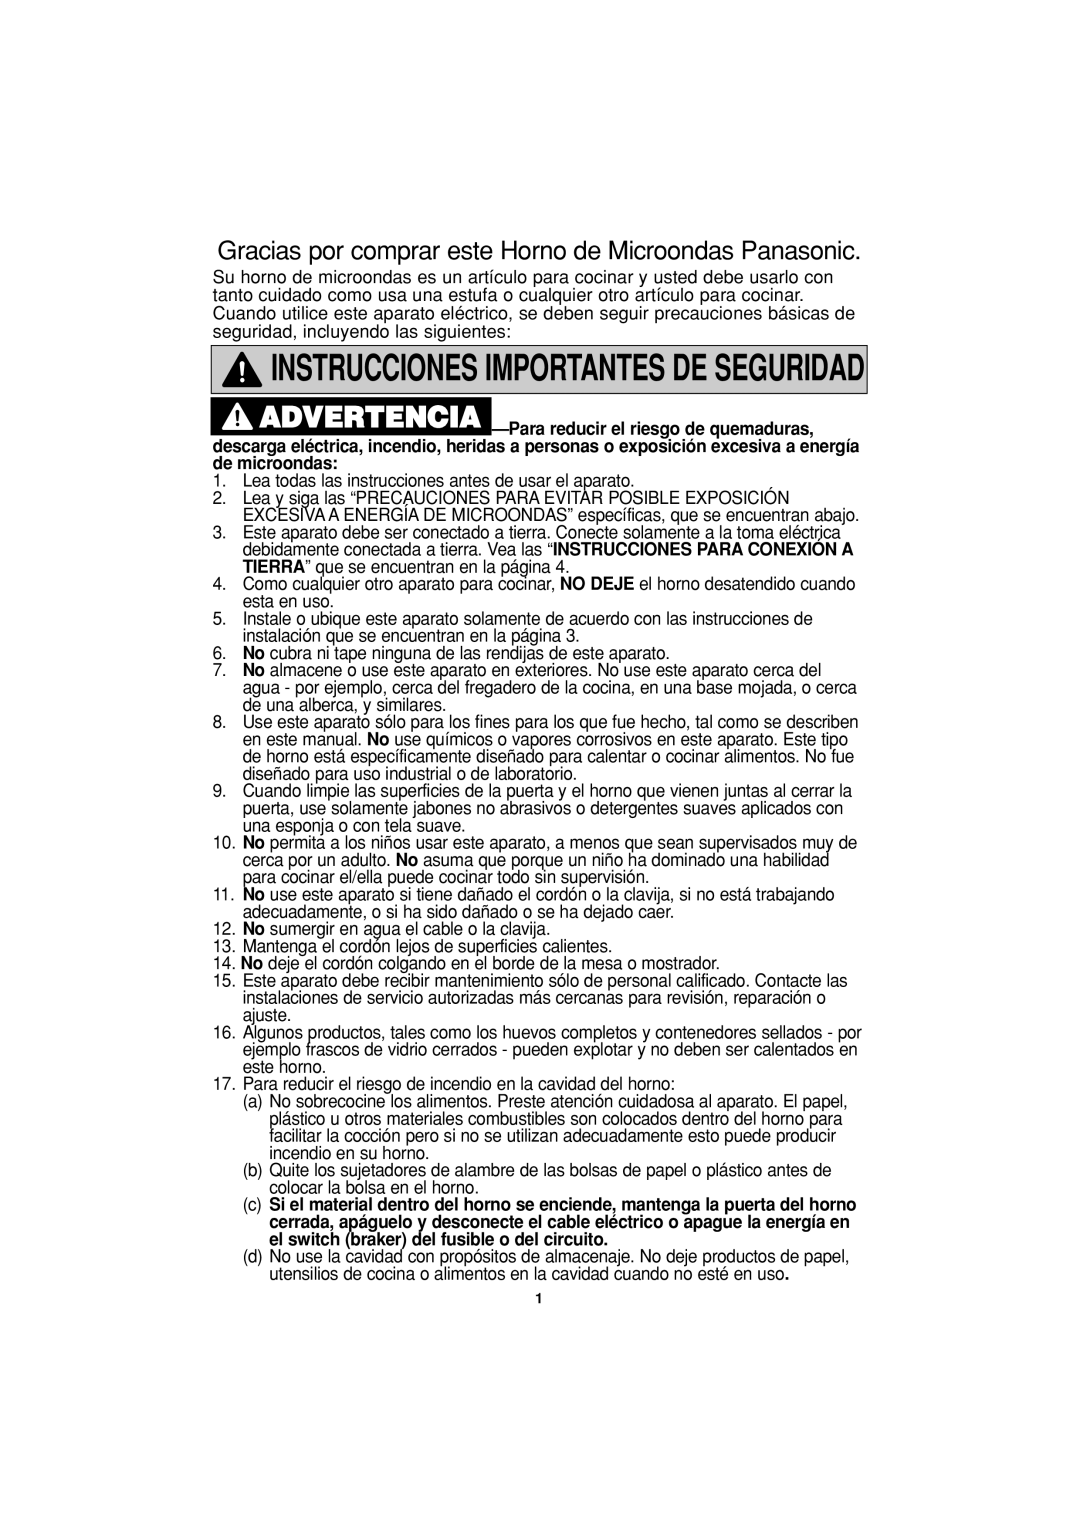 Panasonic NN-S334 important safety instructions Instrucciones Importantes De Seguridad 